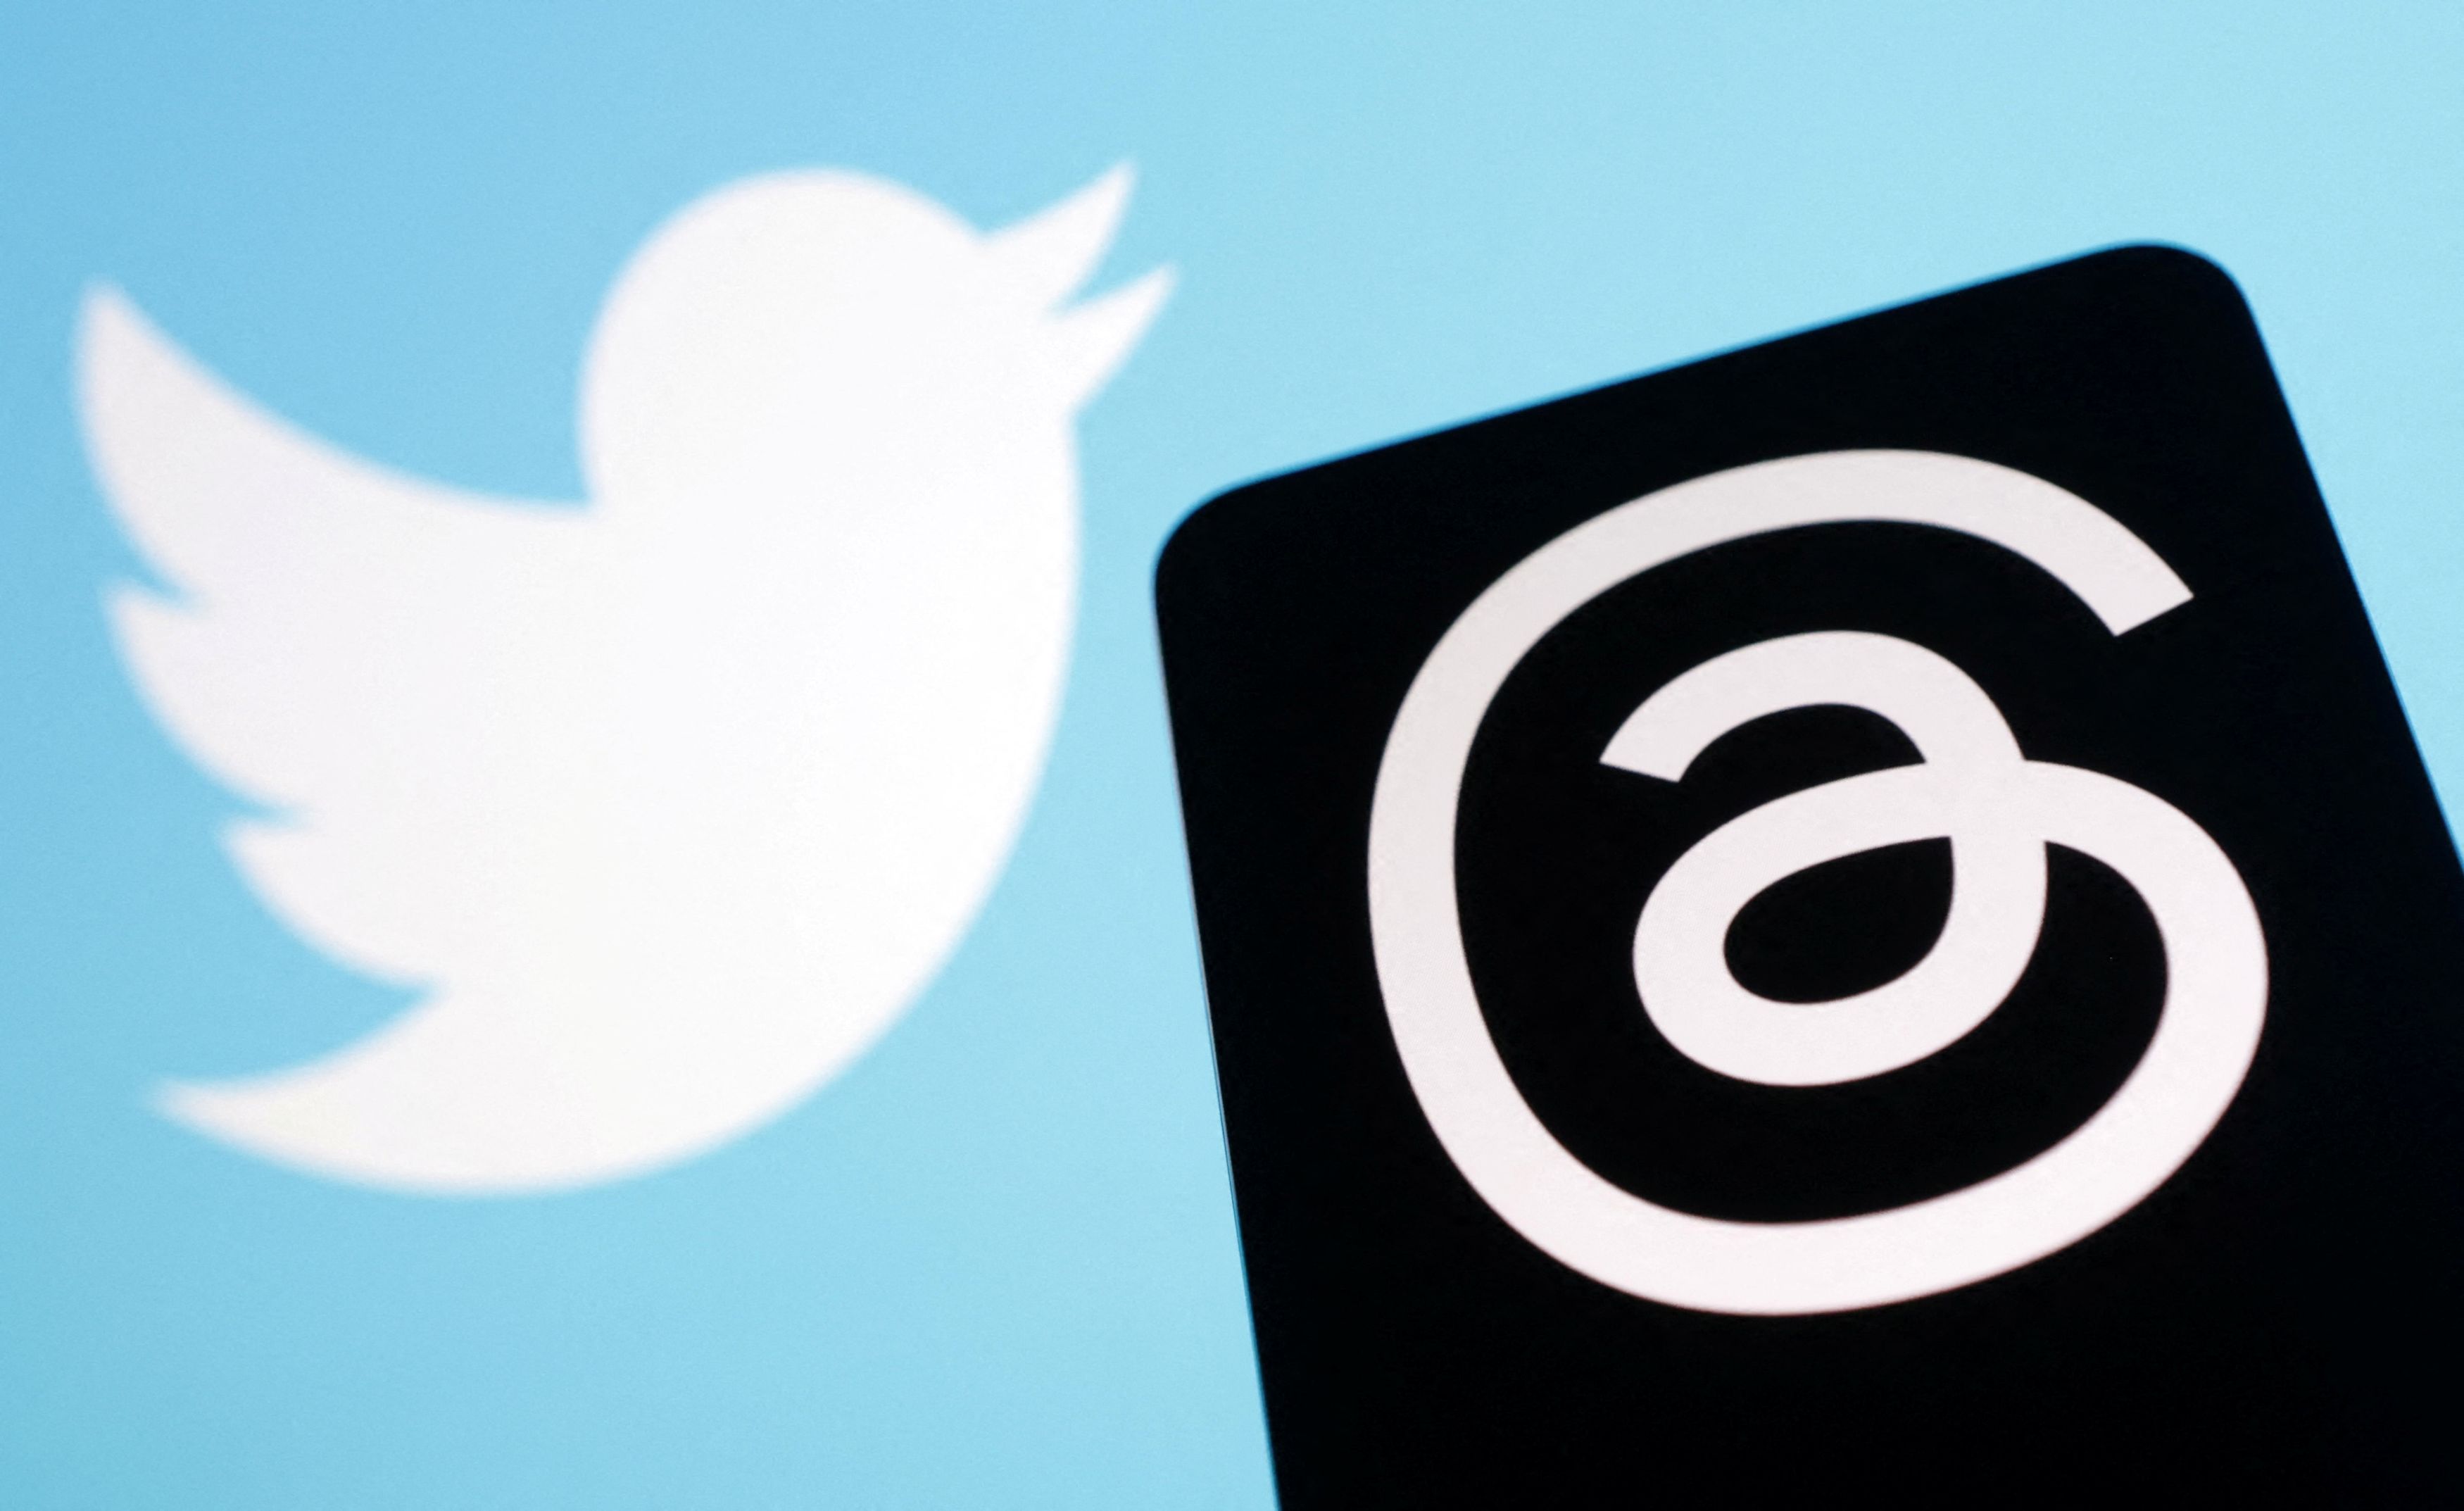 Threads: Η Meta λανσάρει τον αντίπαλο του Twitter